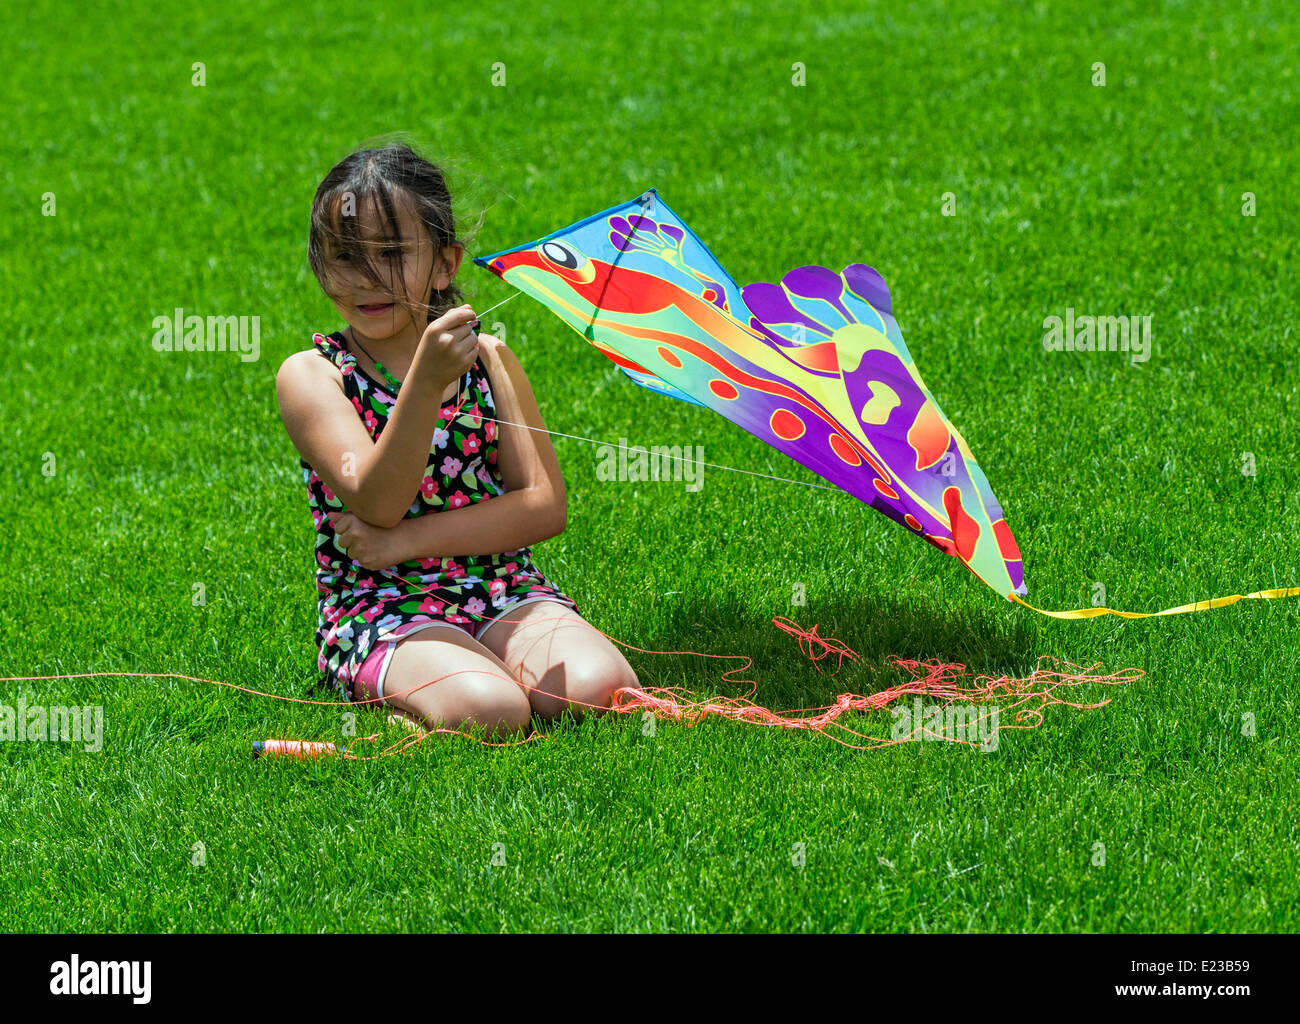 Young woman flying a kite sur les champs Banque D'Images